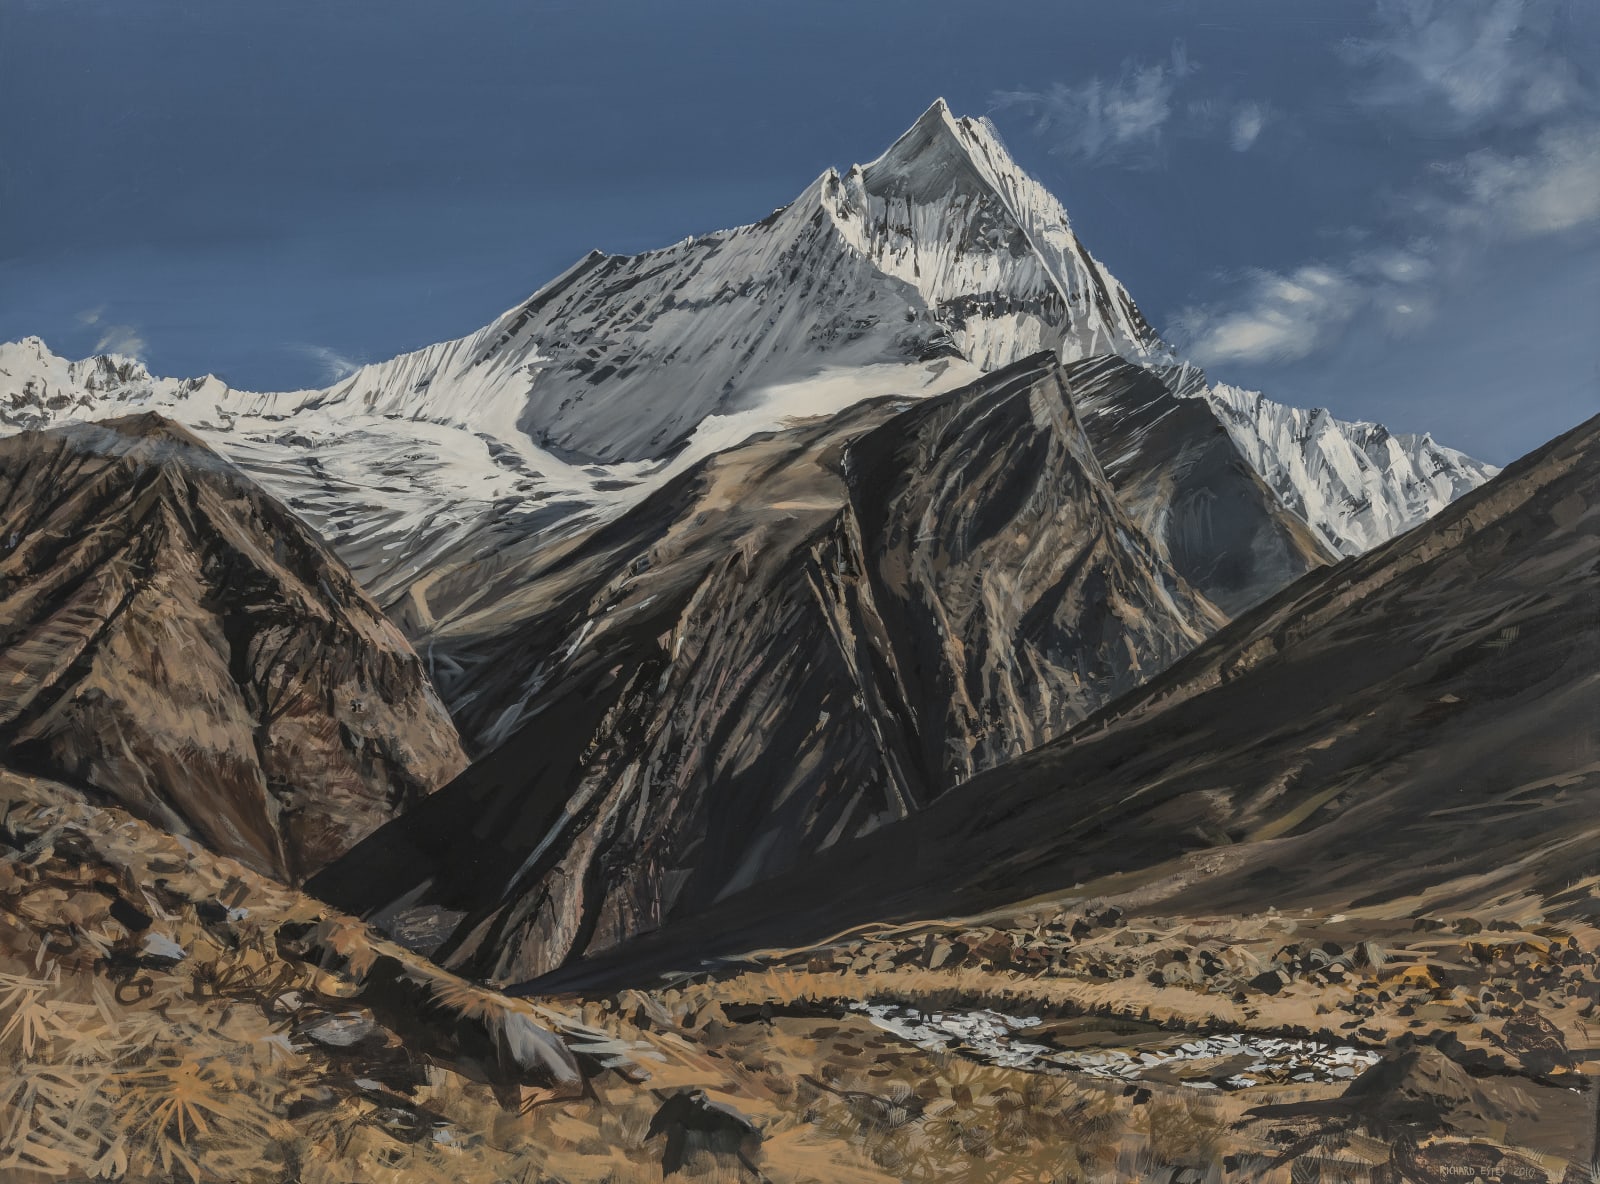 Richard Estes, View in Nepal, 2010